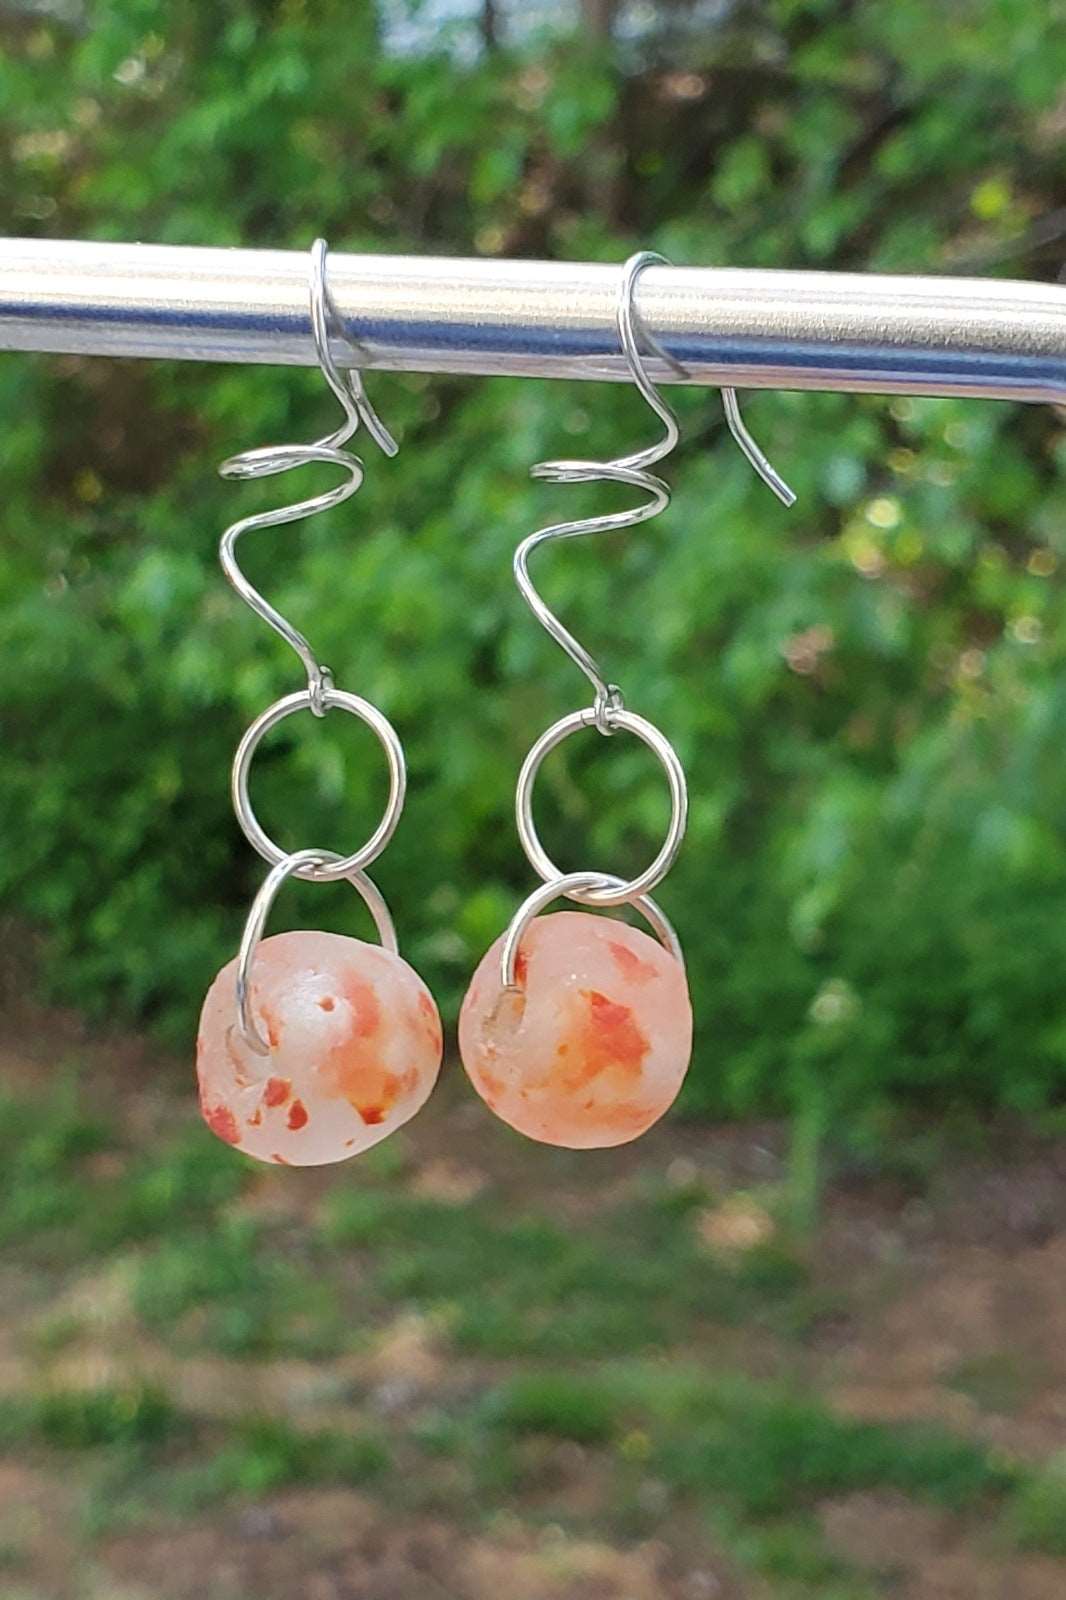 Earrings on metal photo, orange earrings photo, earrings for women, handmade earrings, Vashi Dangle Earrings